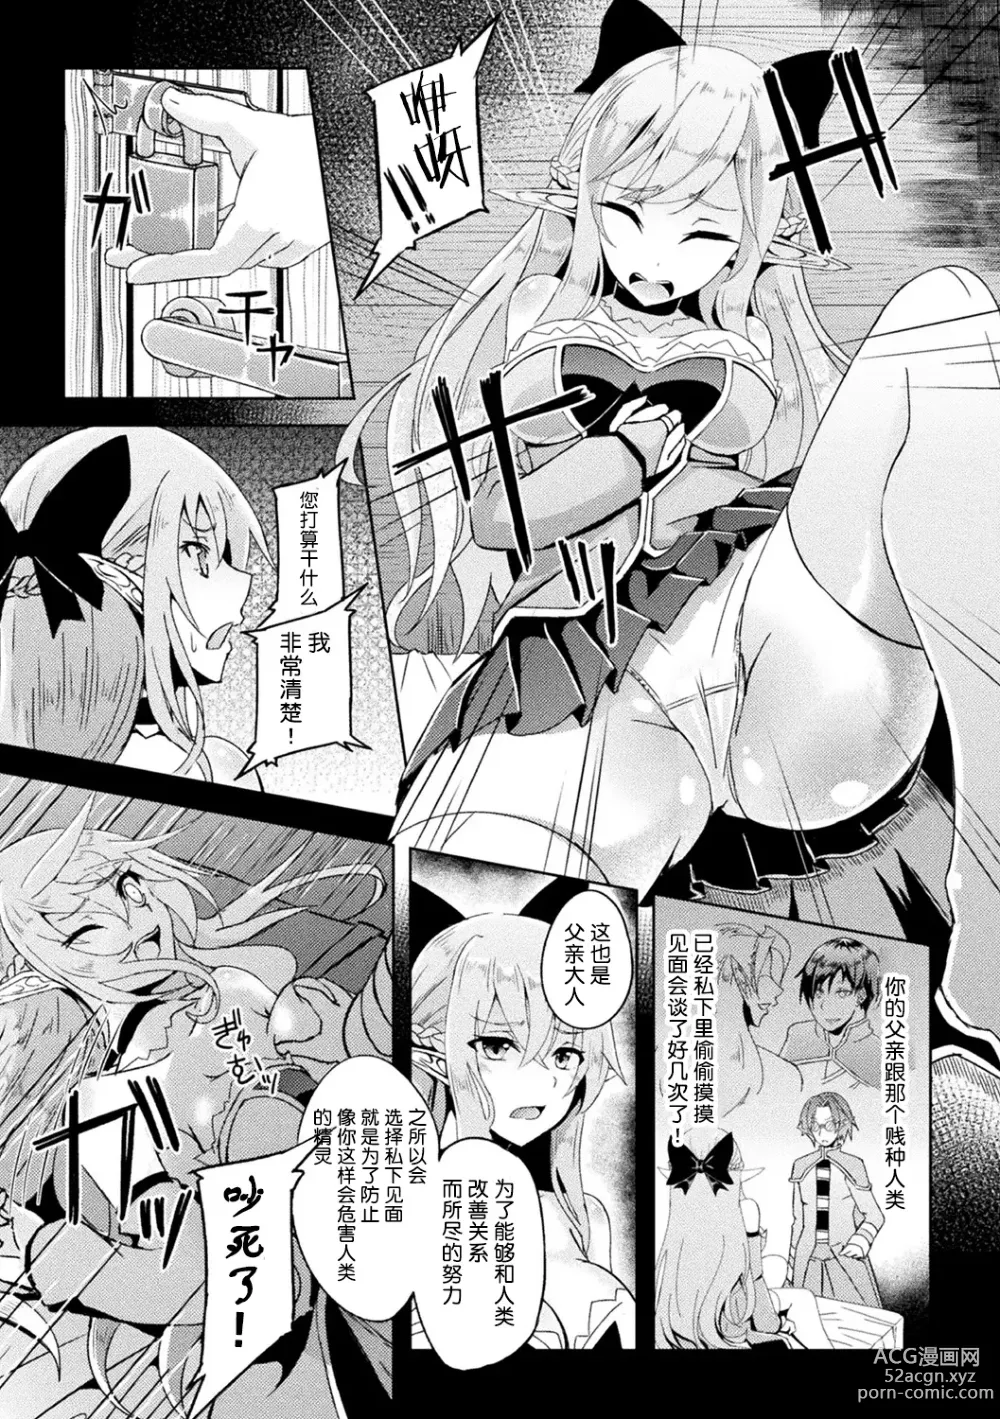 Page 3 of manga 精靈族良家公主殿下薬漬け公開陵辱